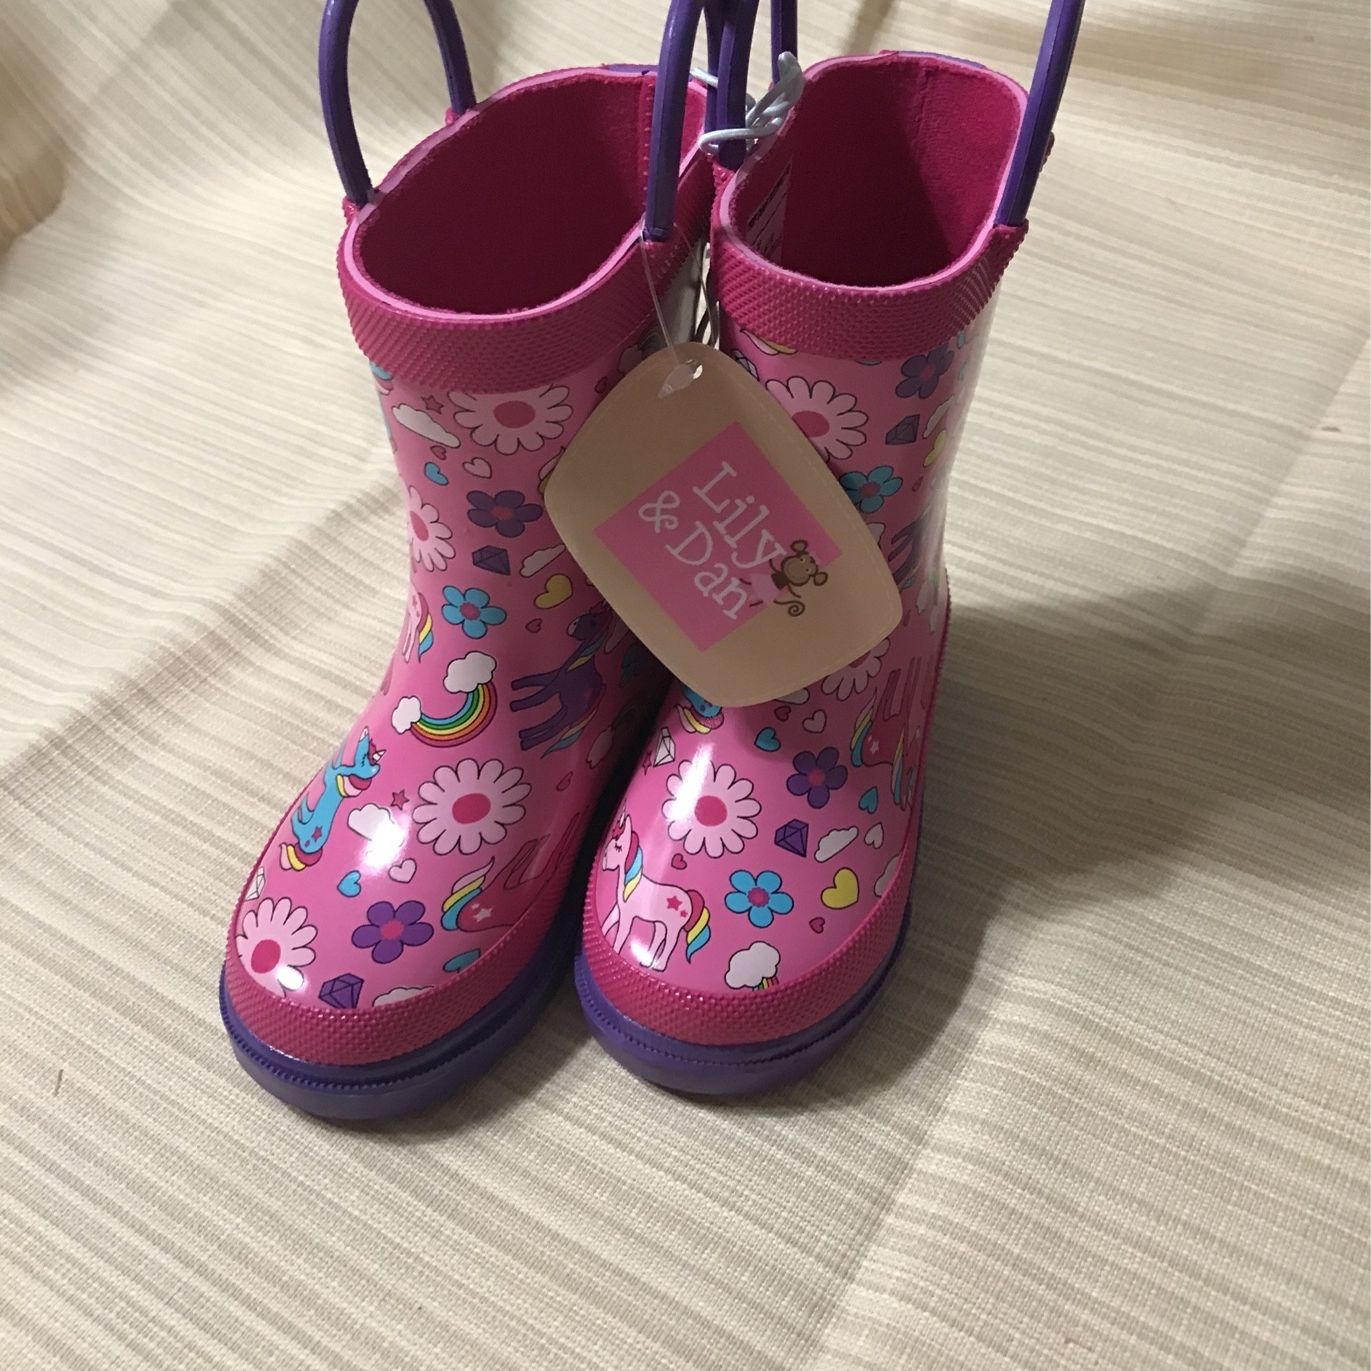 Lily & Dan Girl Rain boots - Size 5/6